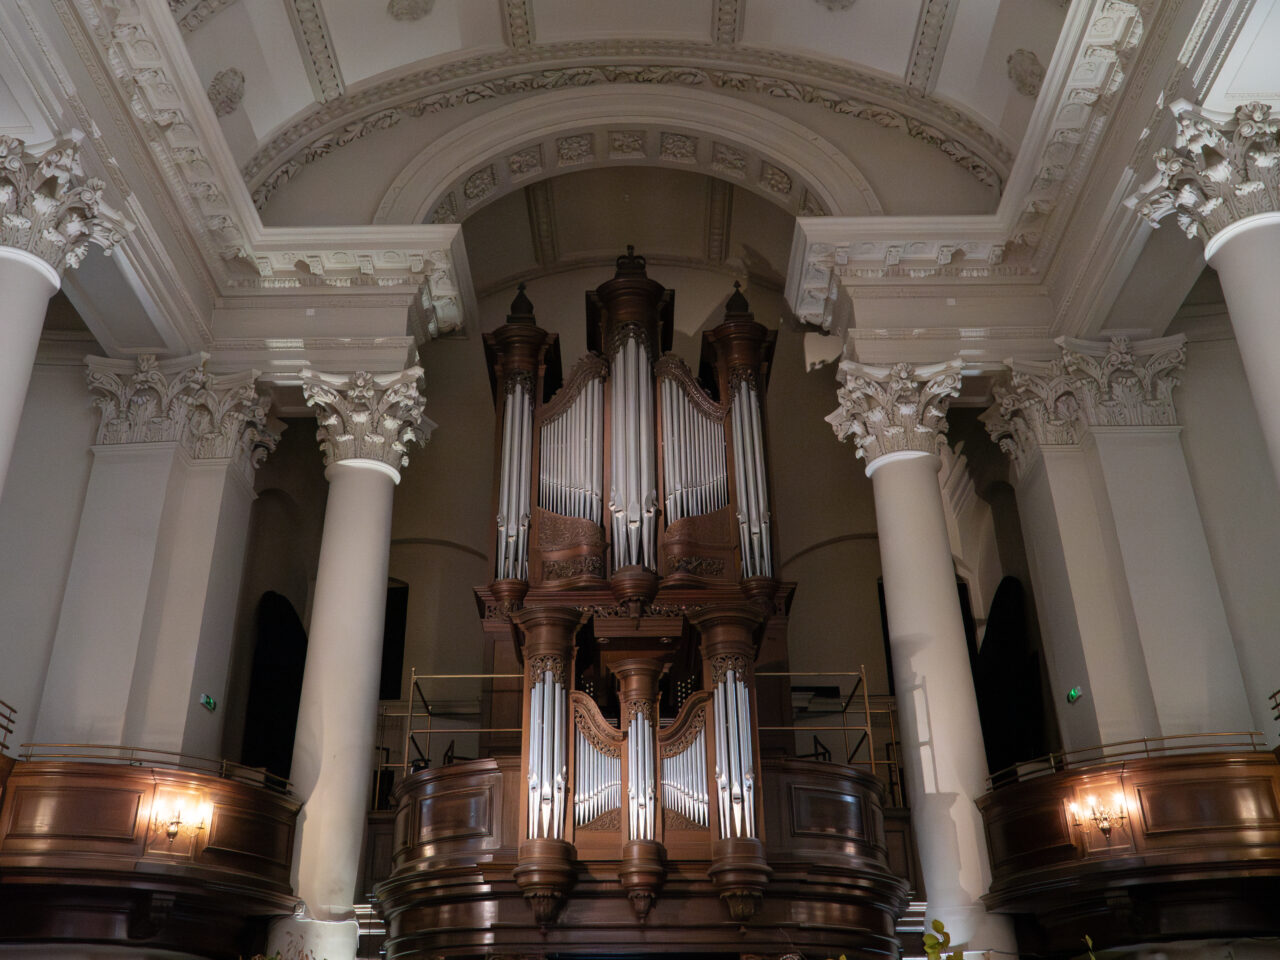 Smith Square's 'Klais' organ